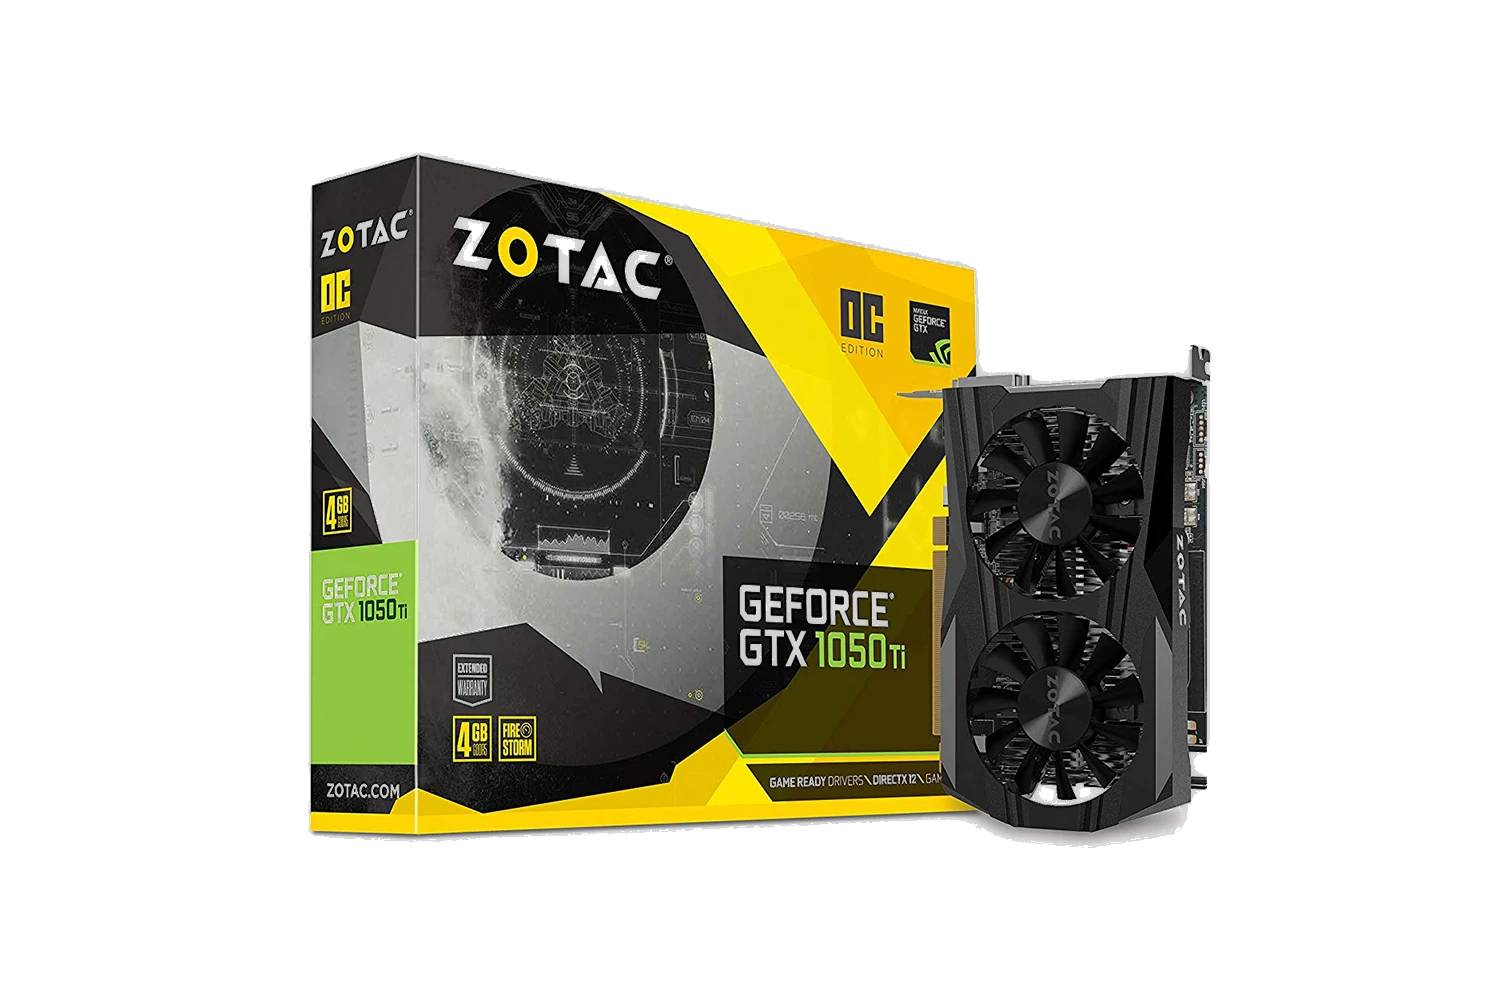 Zotac GeForce GTX 1050 Ti OC 4GB Graphics Card